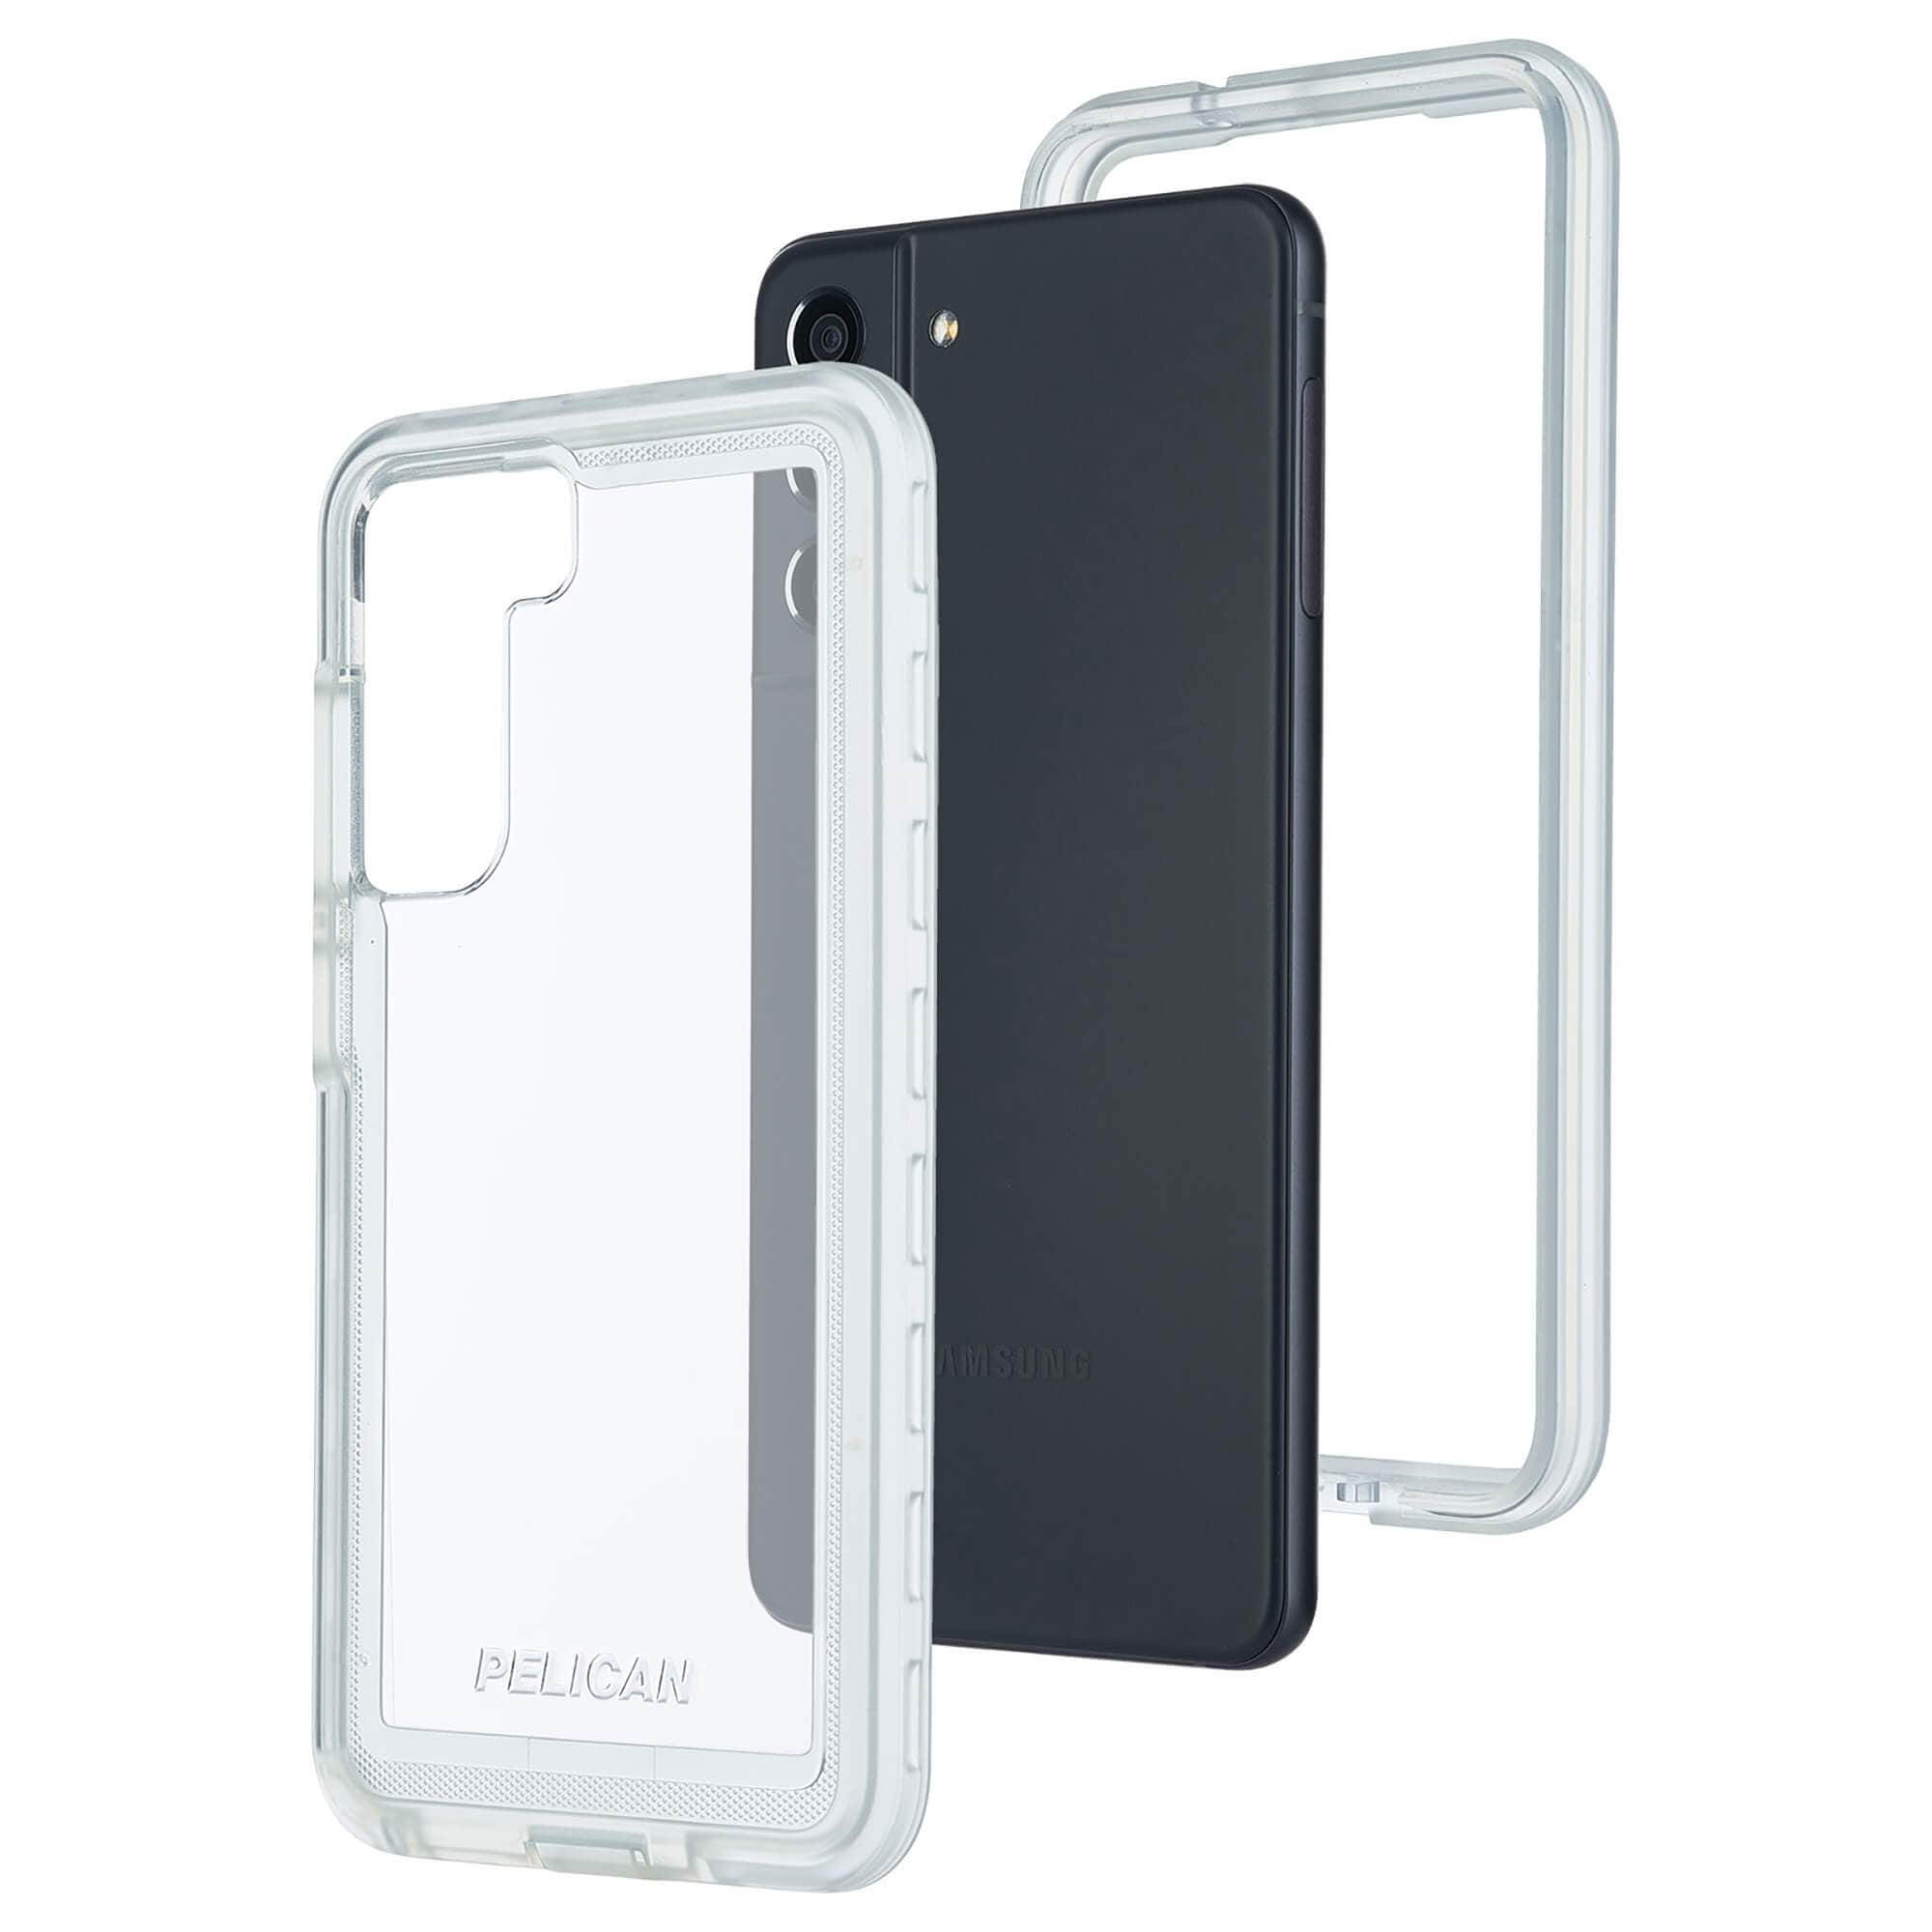 2 Piece Protective case design. color::Clear